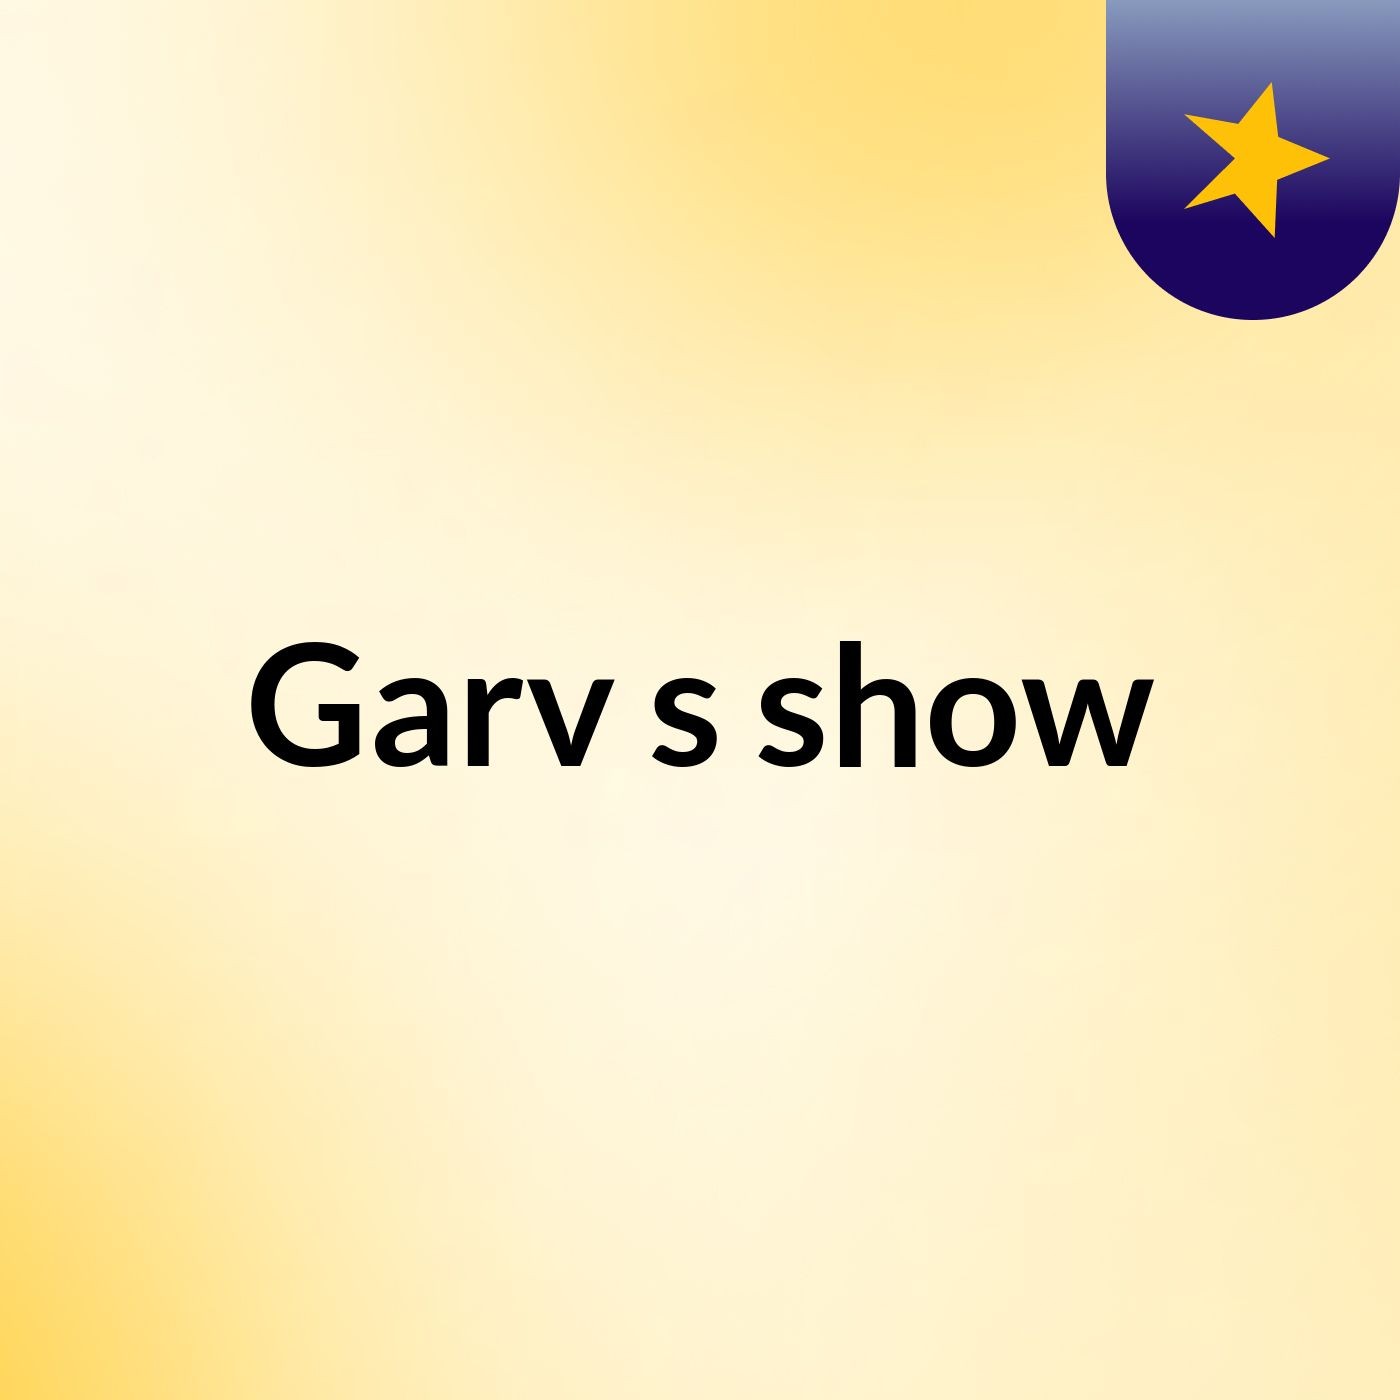 Garv's show